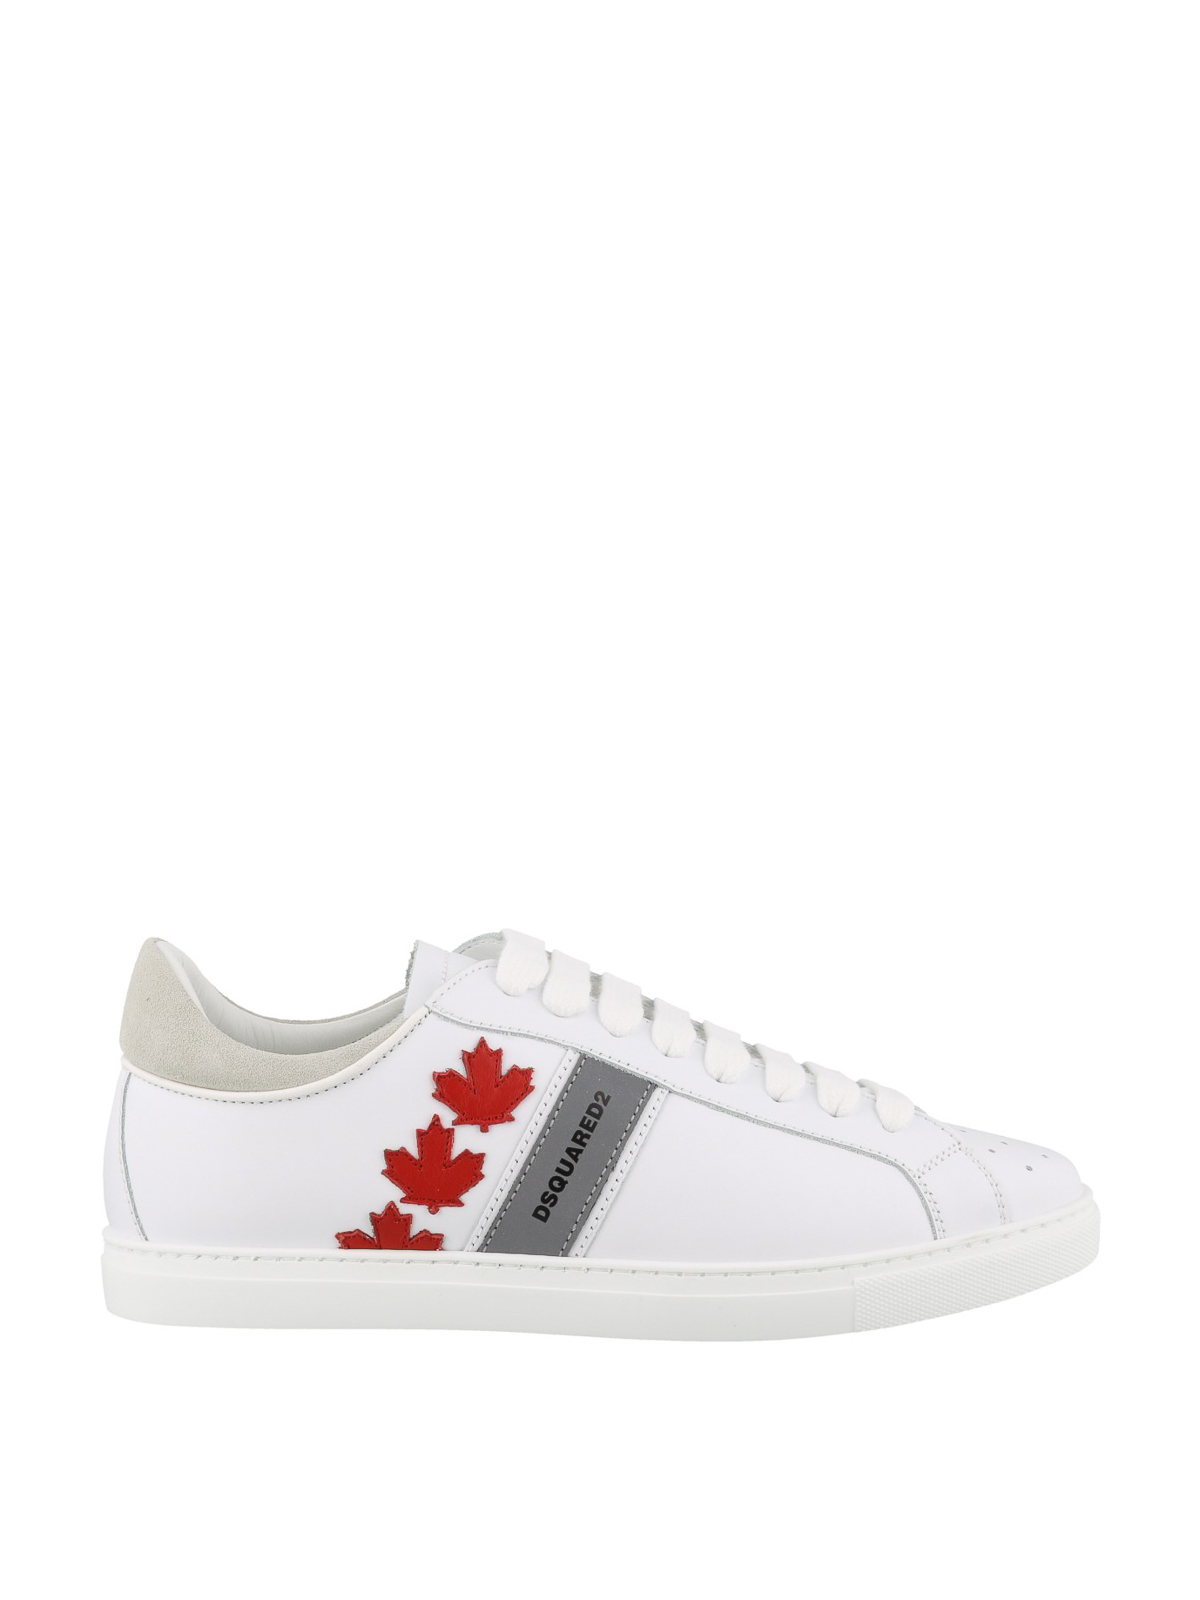 canadian sneakers